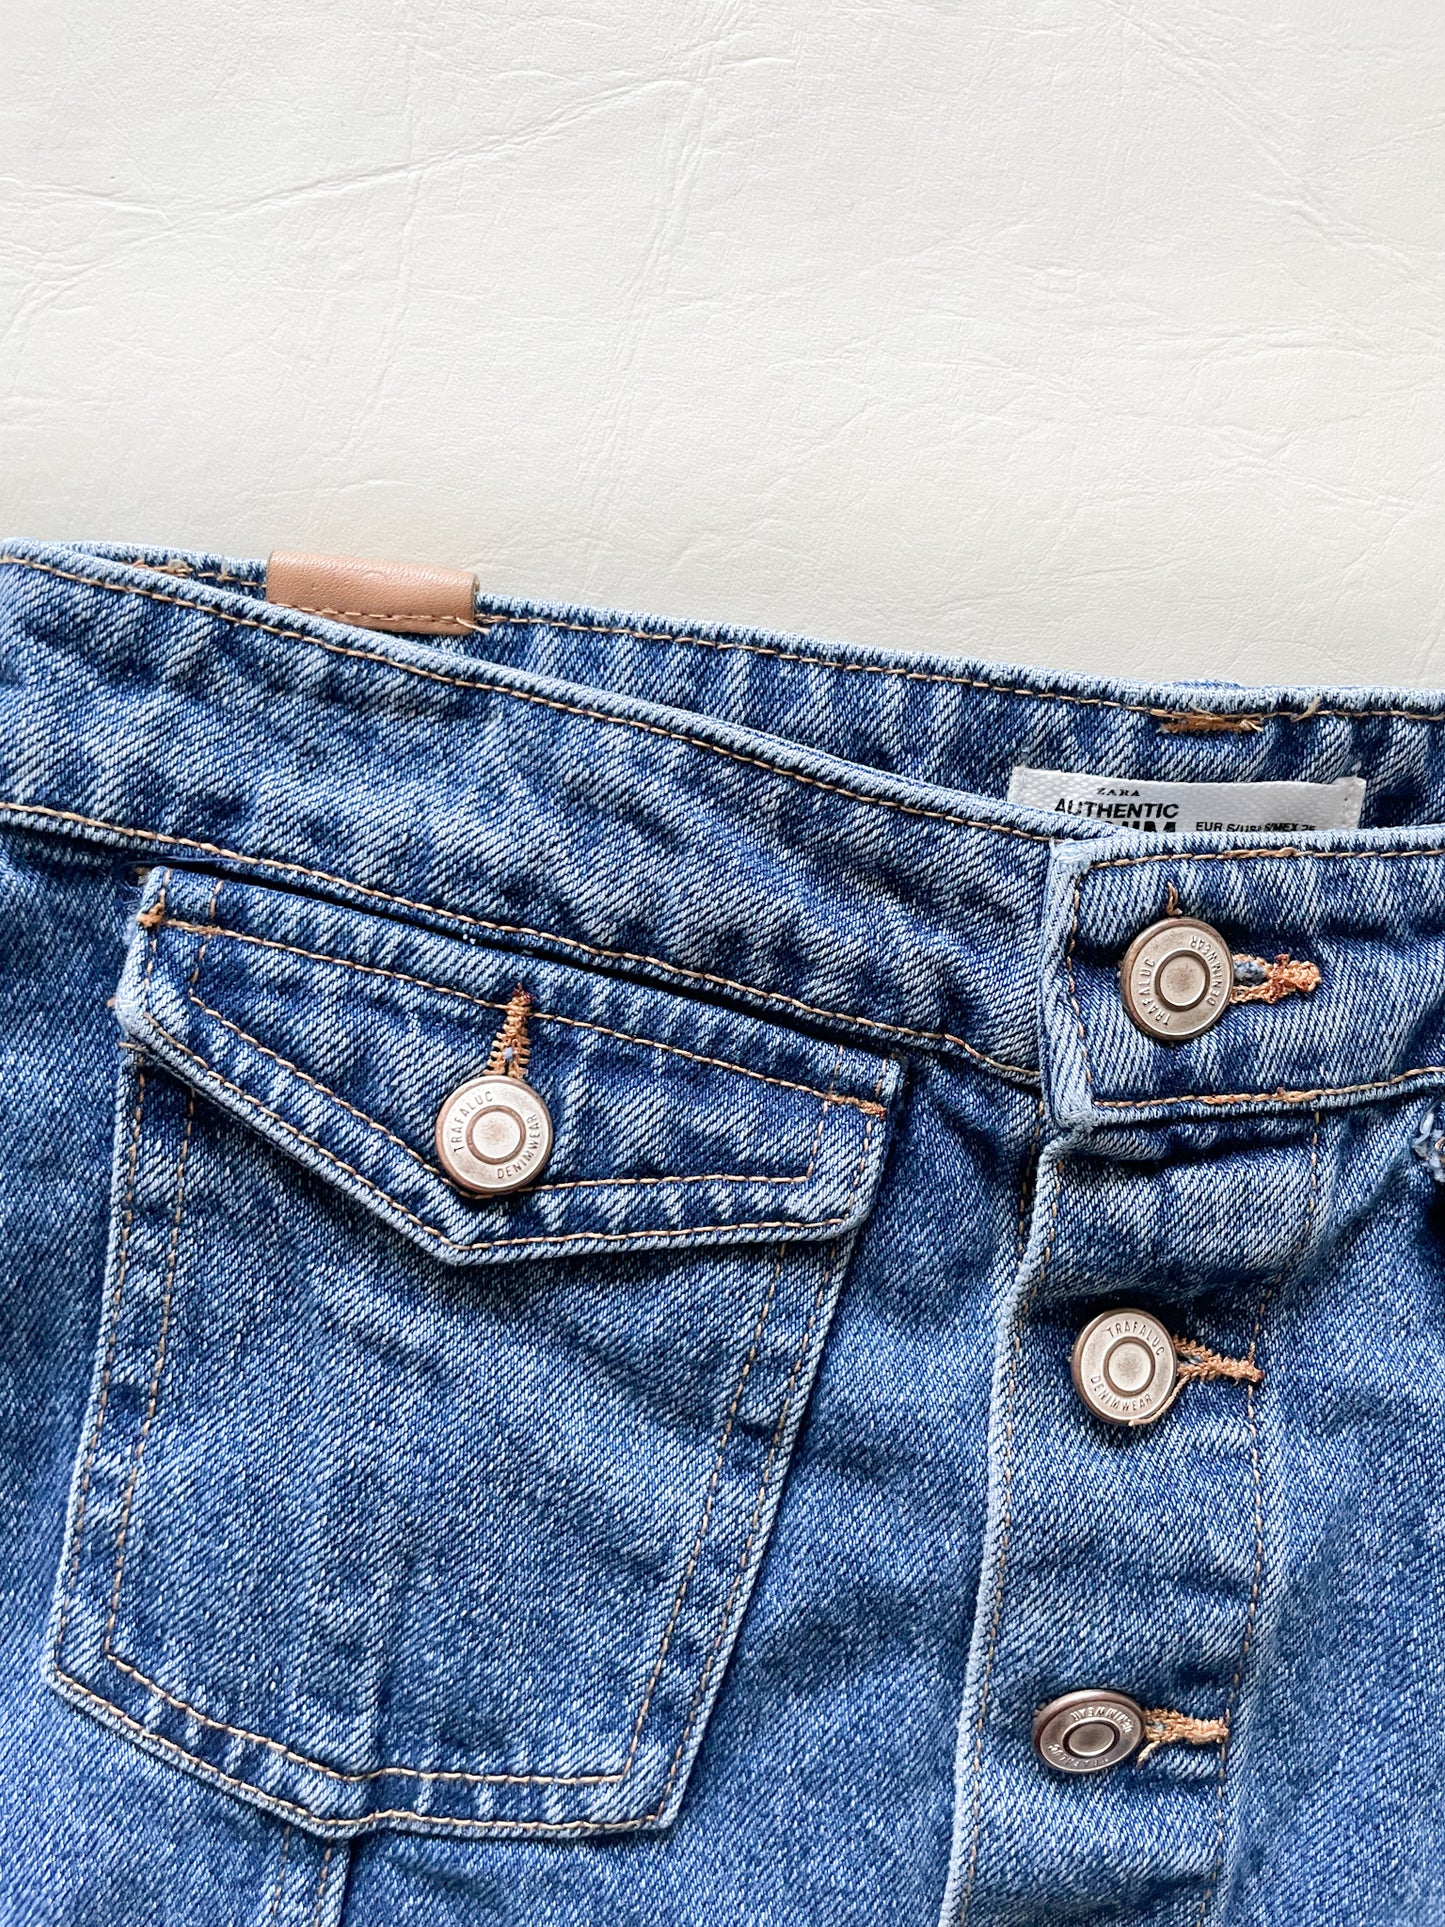 Zara Trafaluc Buttonfront Cutoff 100% Cotton Denim Skirt - Small